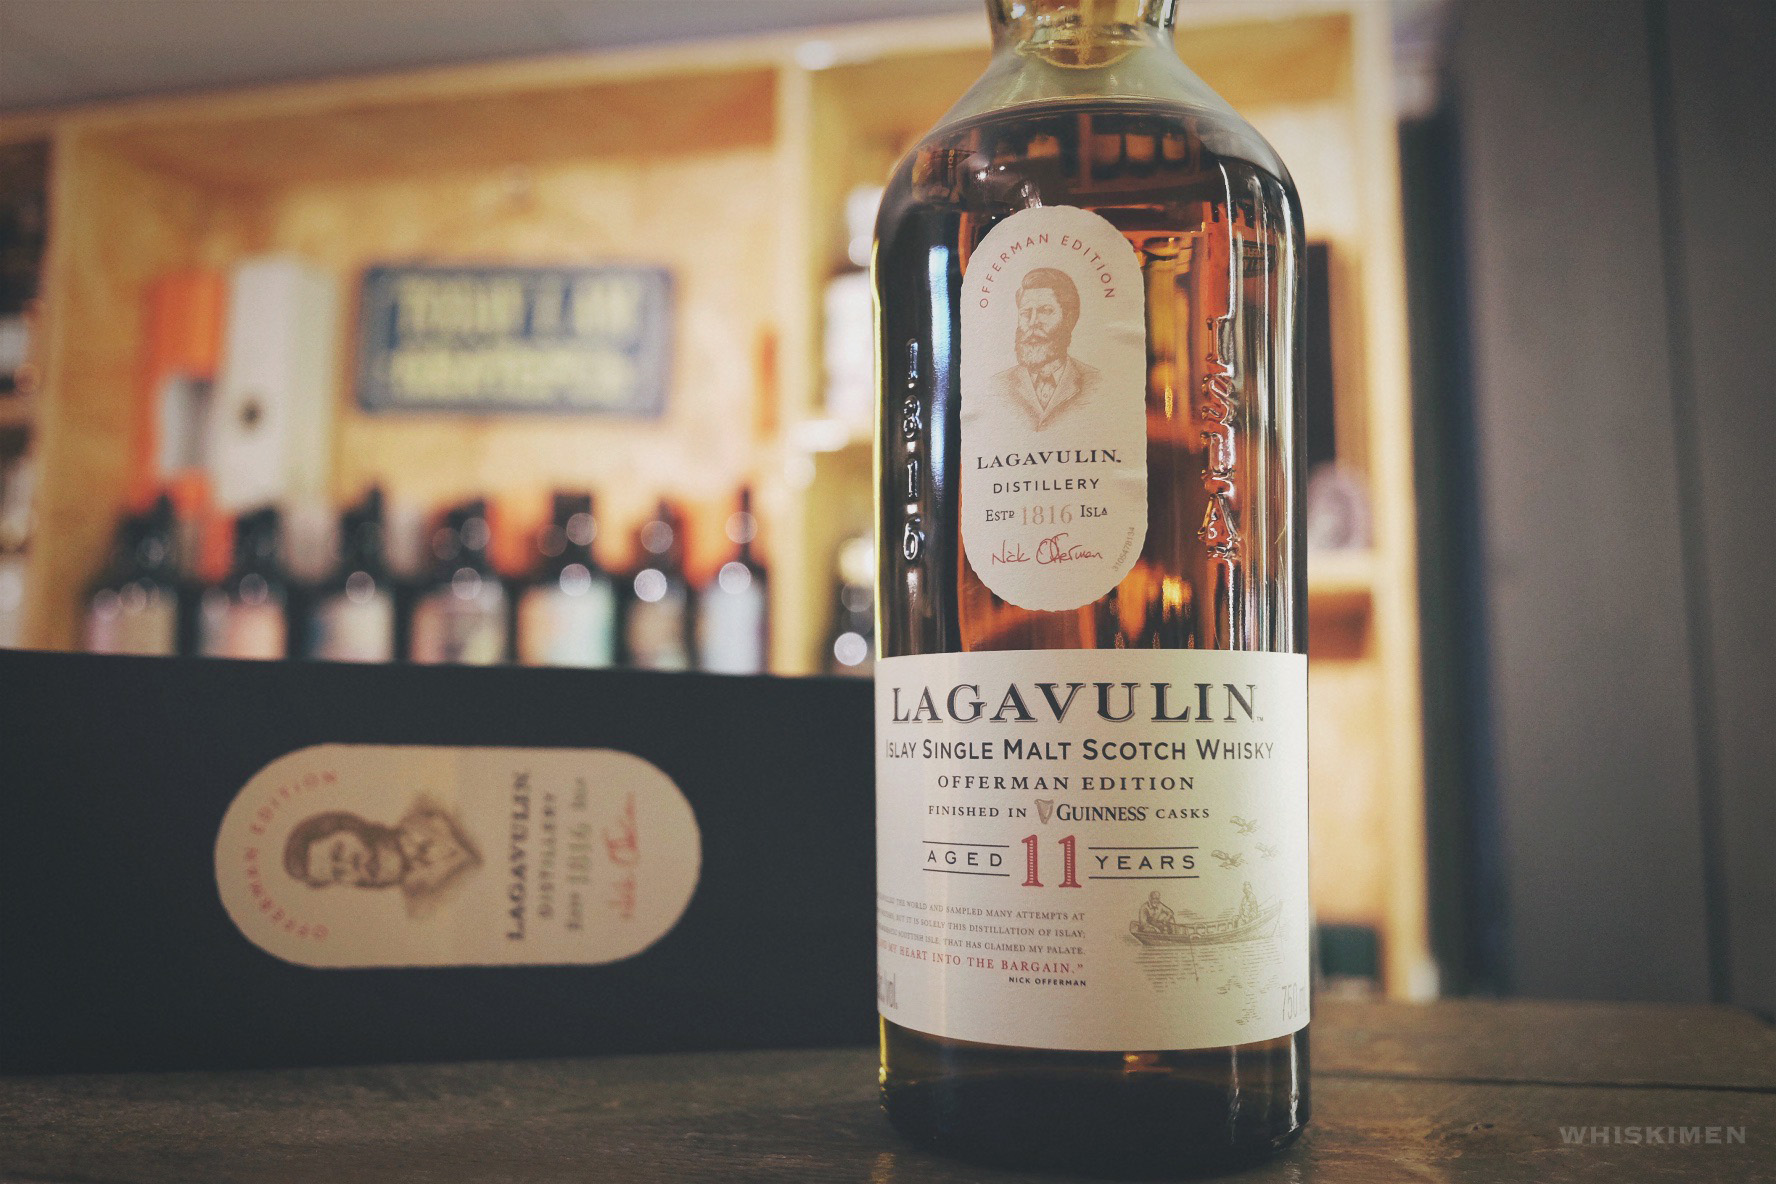 Lagavulin 11 Year Old Single Malt Scotch Whisky (Offerman Edition) Guinness Cask Finish